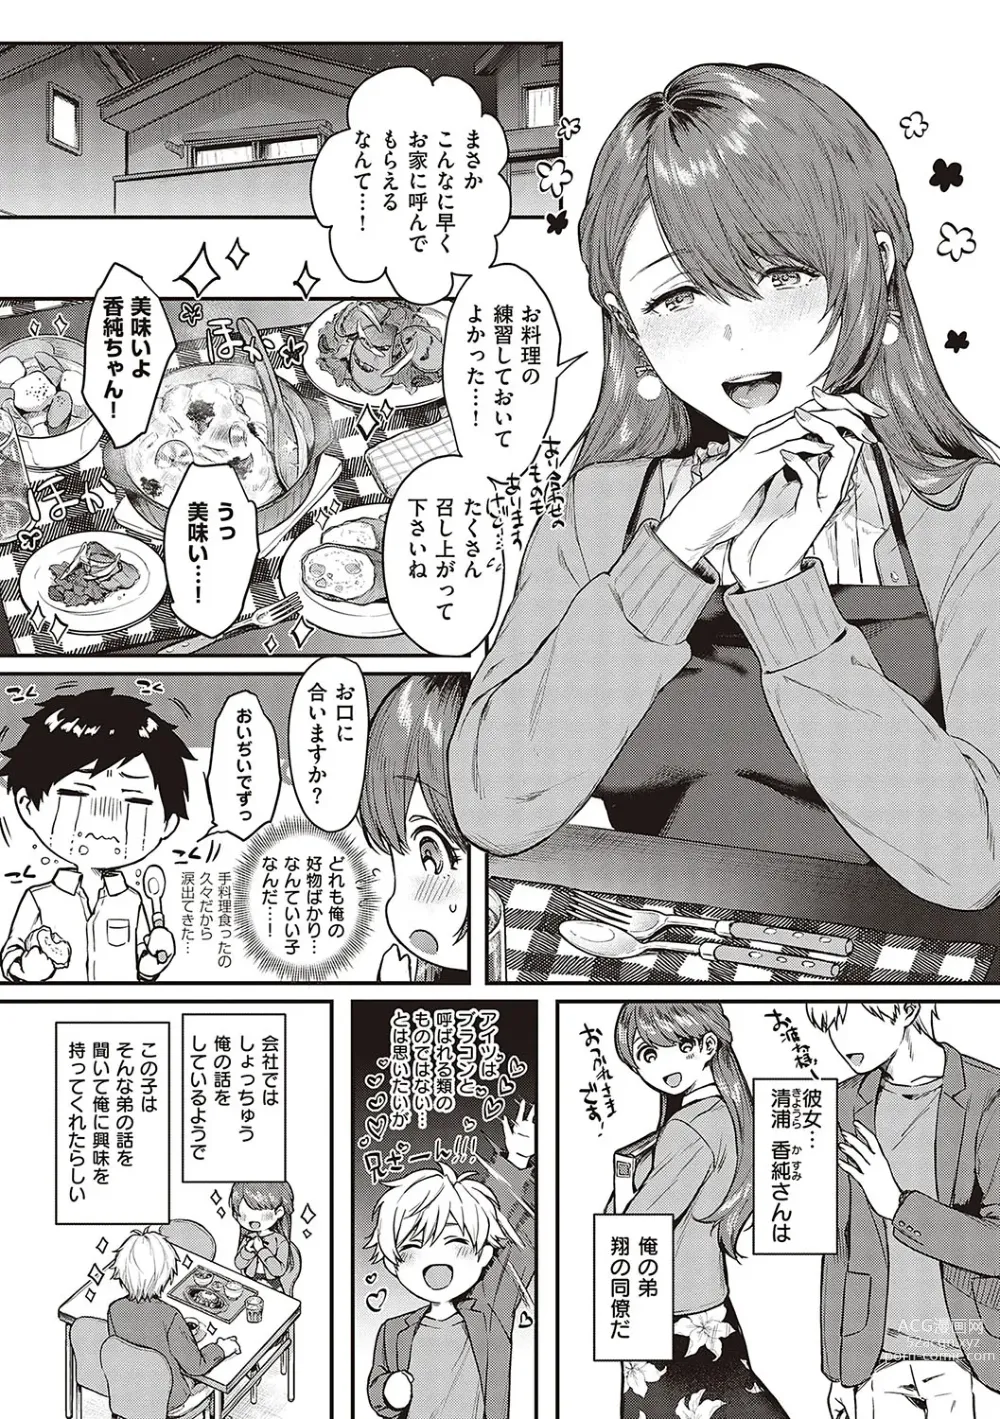 Page 8 of manga Kedamono Inmoralism - The Beastly Immoralism